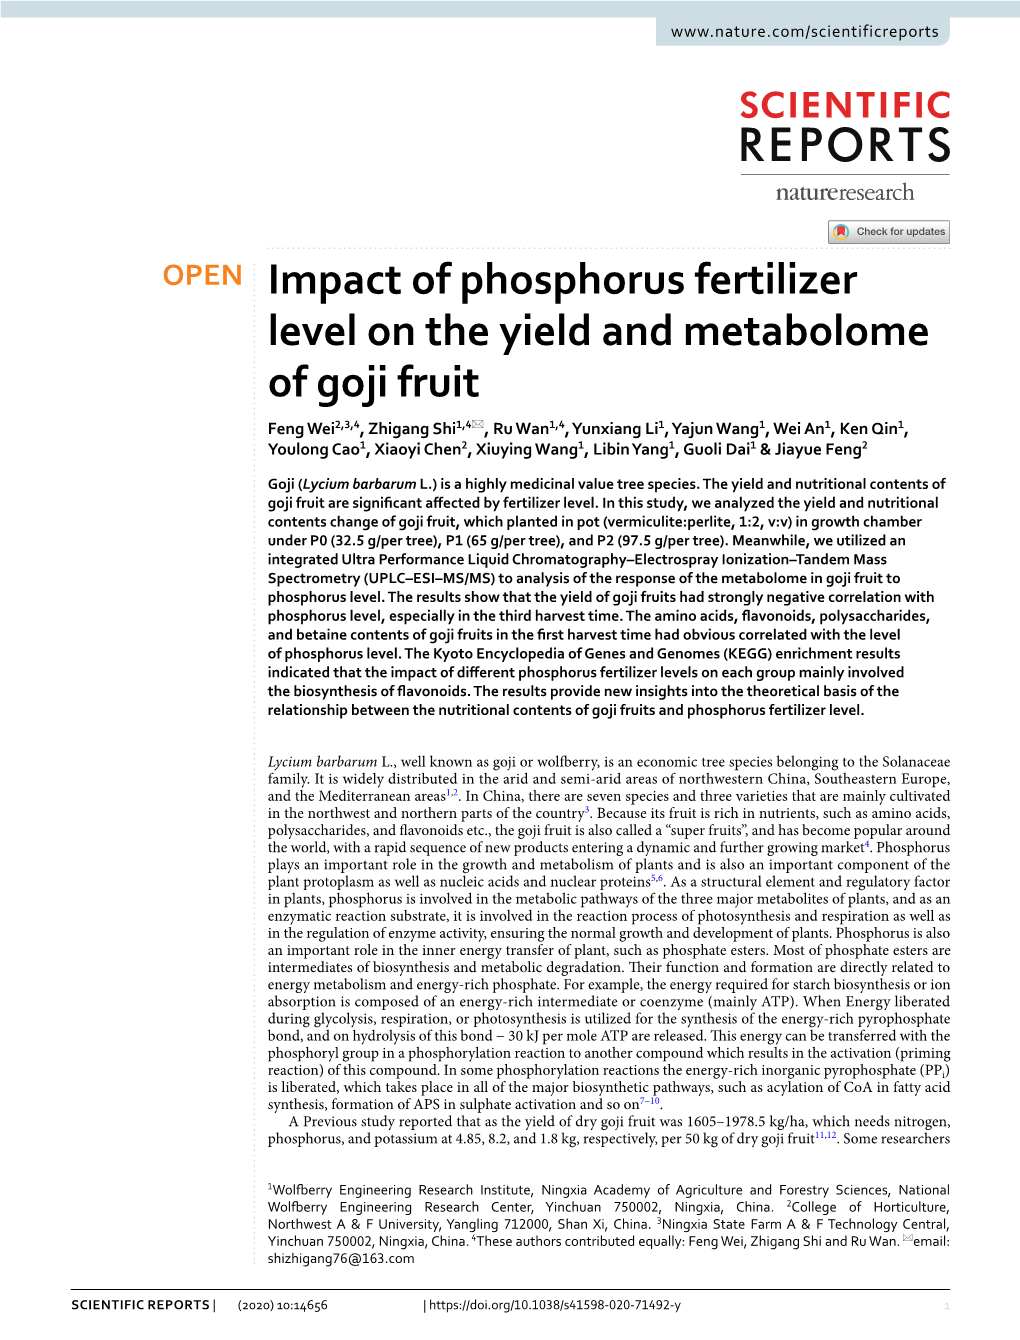 Impact of Phosphorus Fertilizer Level on the Yield and Metabolome of Goji Fruit